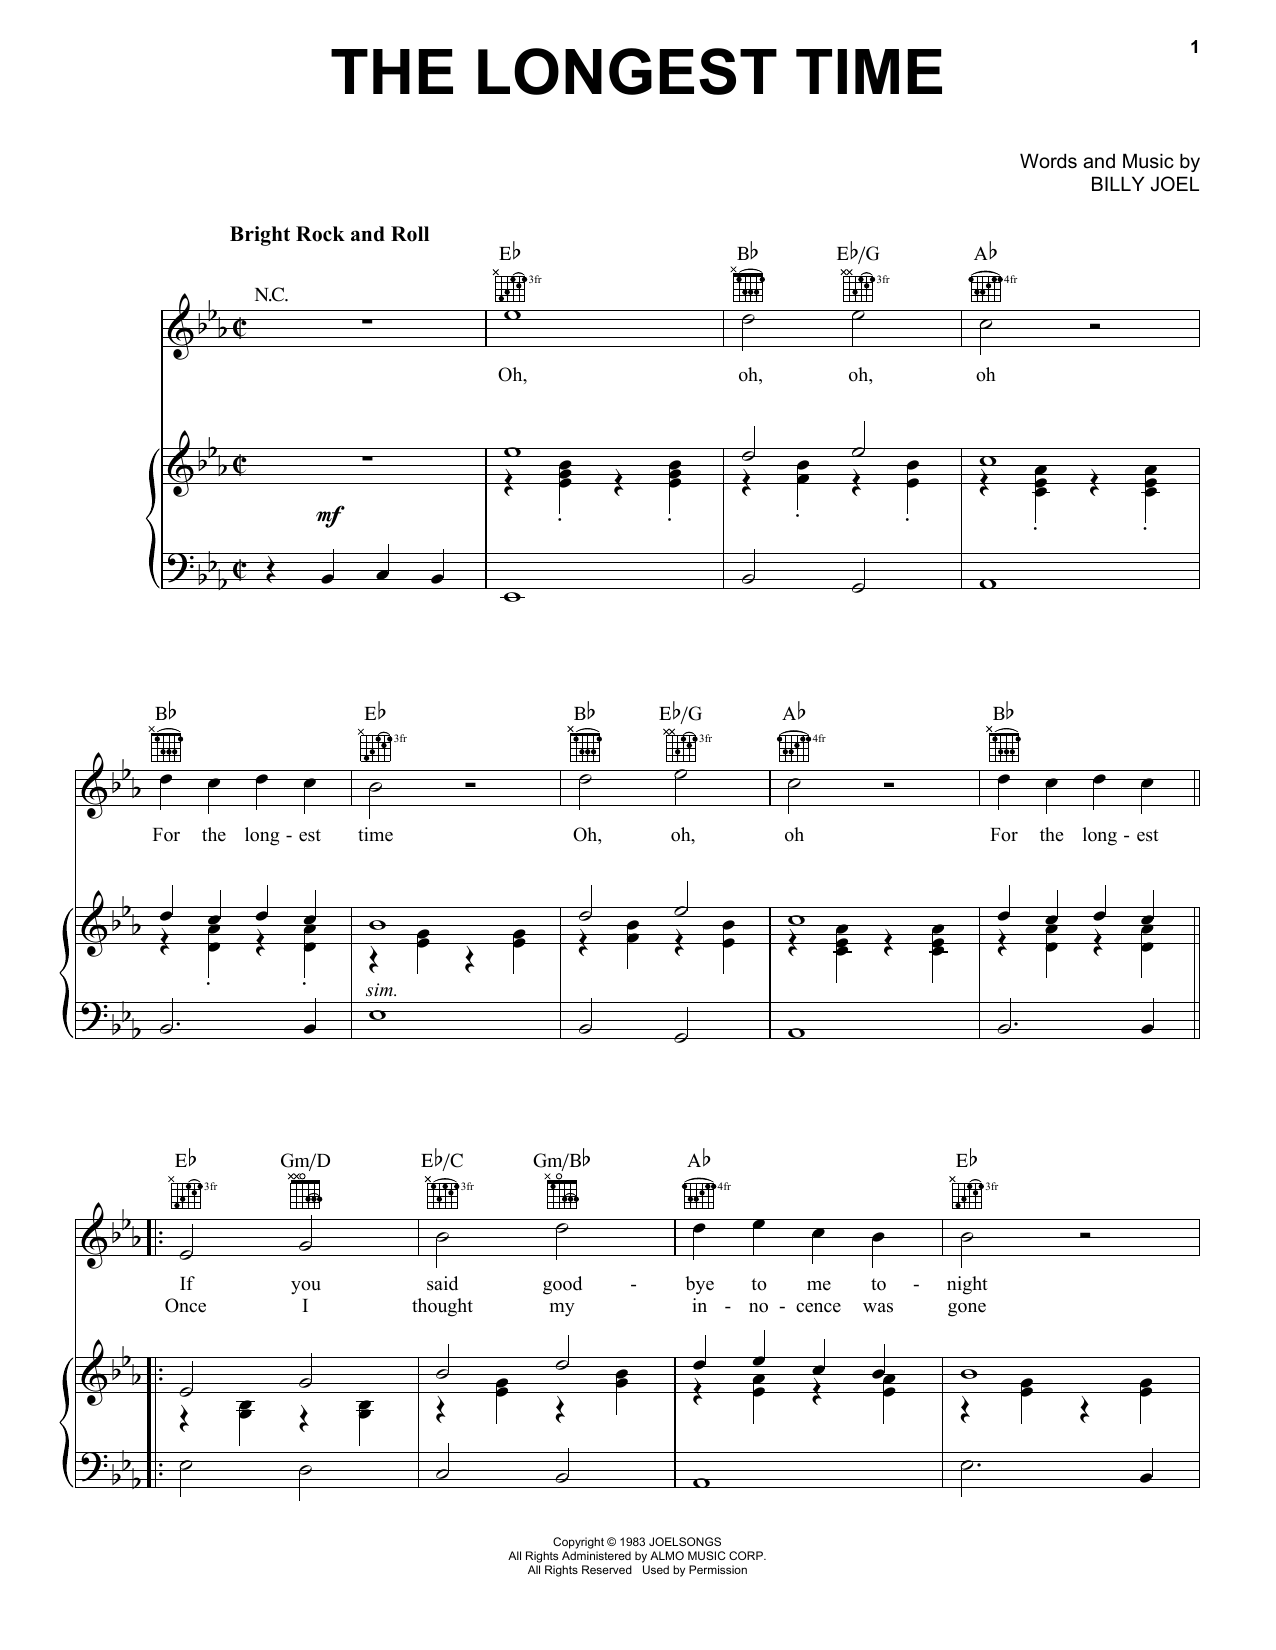 Billy Joel The Longest Time Sheet Music Notes & Chords for Ukulele - Download or Print PDF